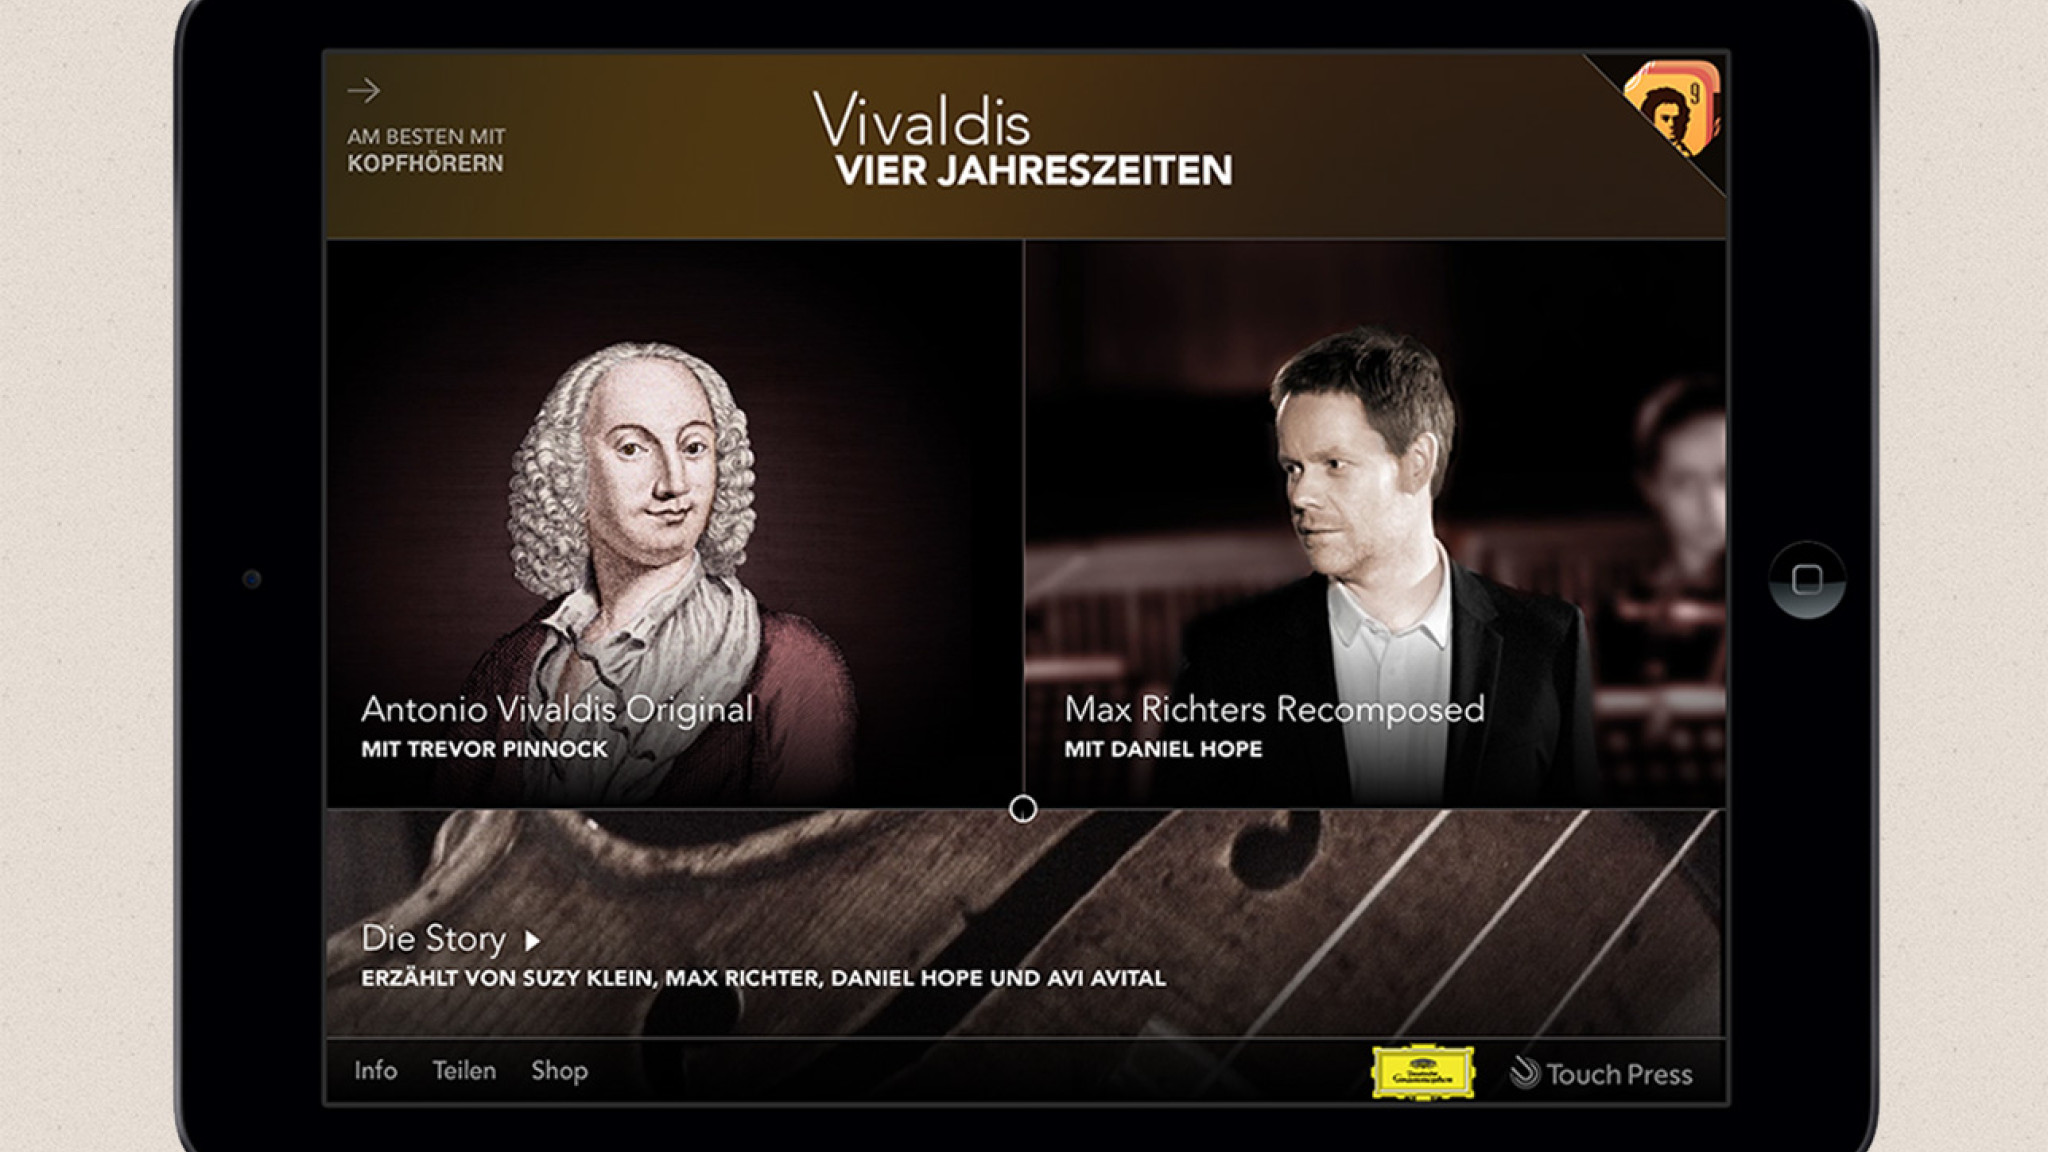 APPlaus, APPlaus! - iTunes prämiert die Vivaldi-App der DG!